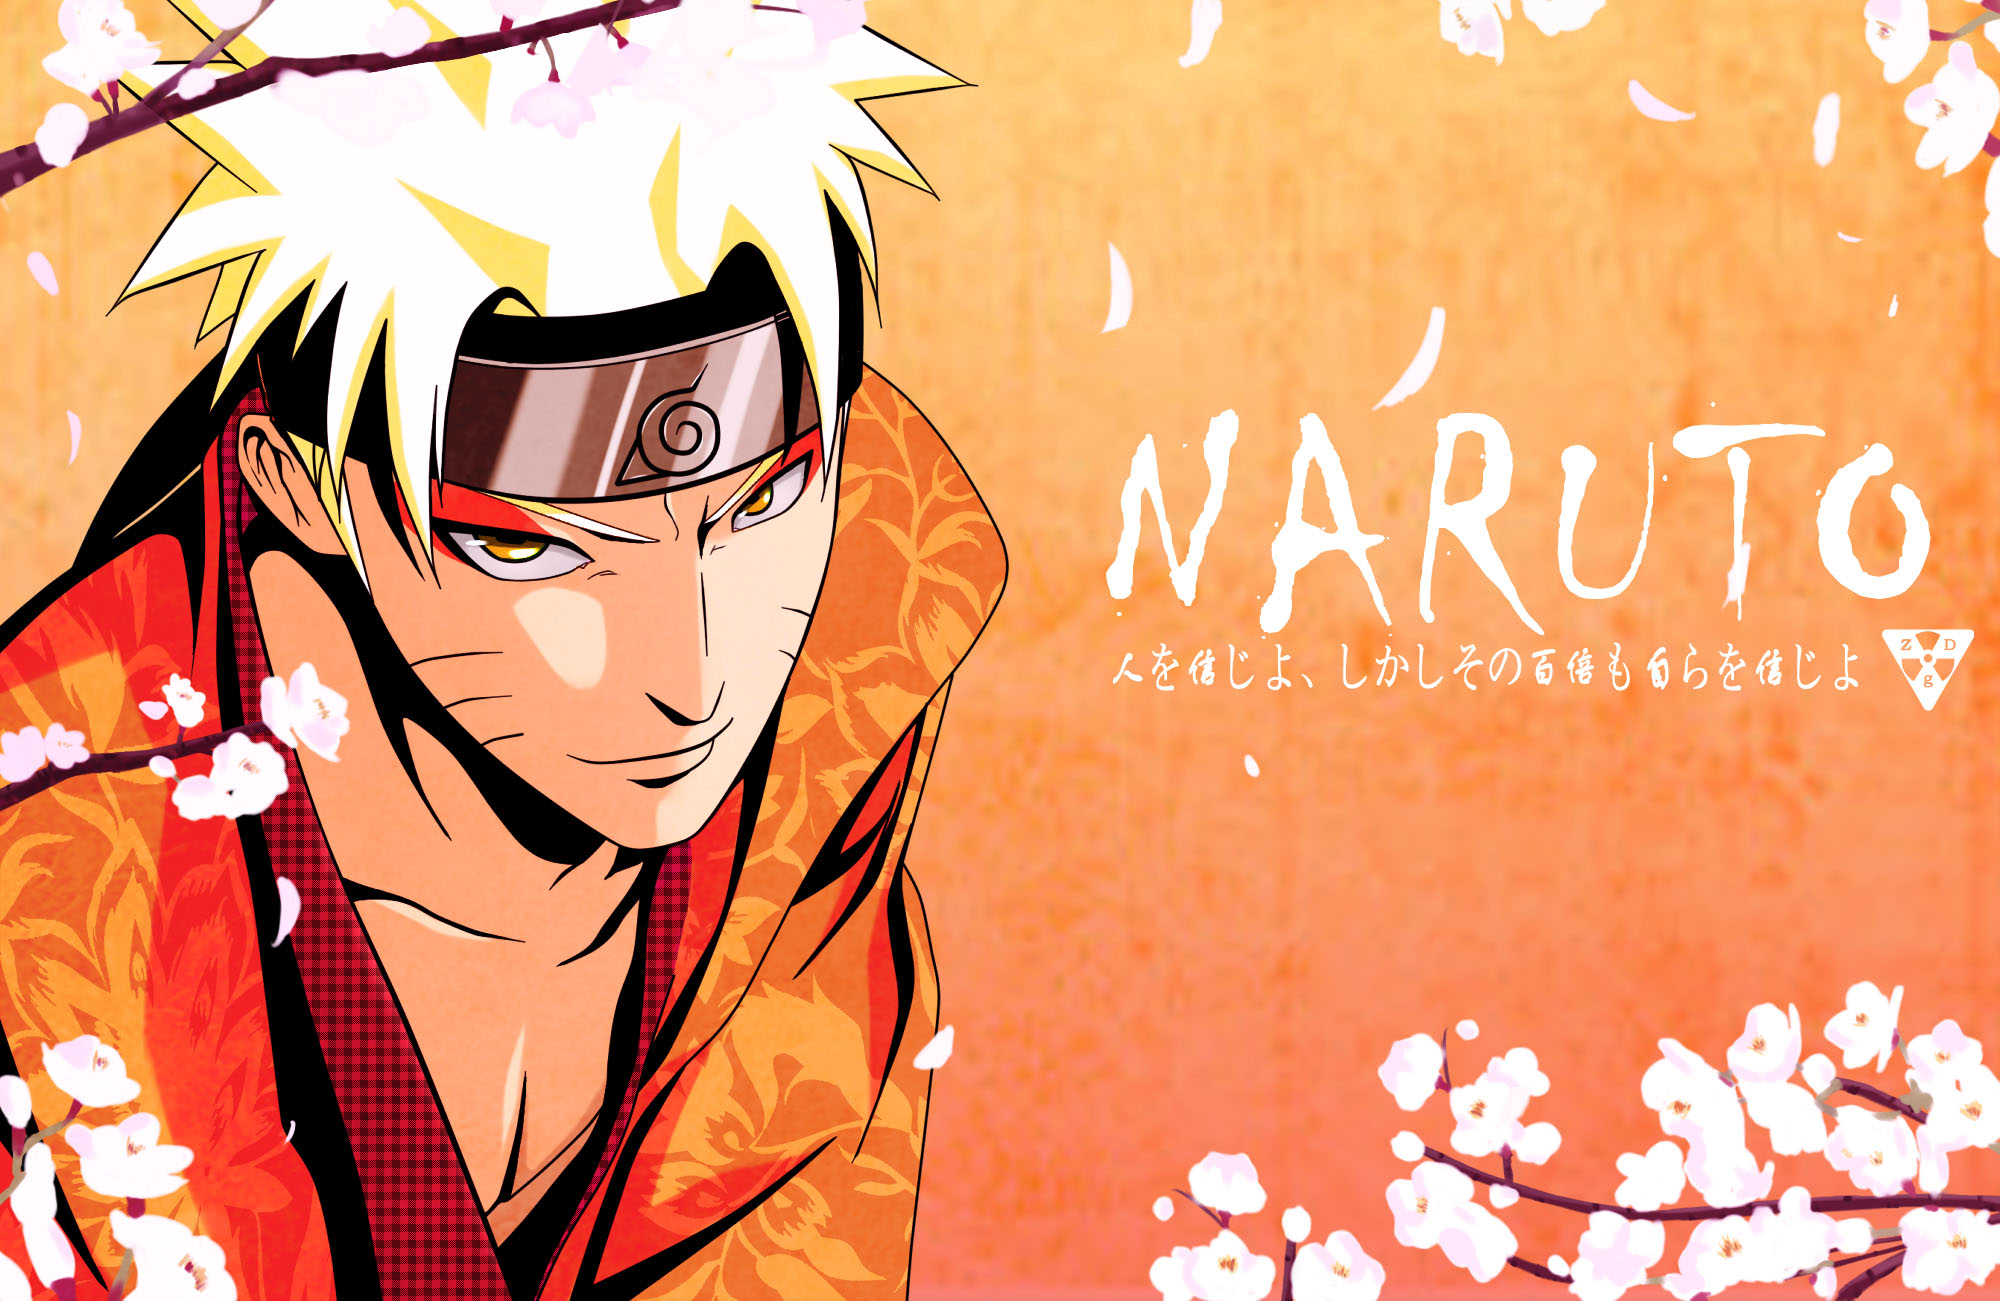 Descarga gratis la imagen Naruto, Venda, Sonreír, Animado, Rubia, Naruto Uzumaki, Sabio (Naruto) en el escritorio de tu PC